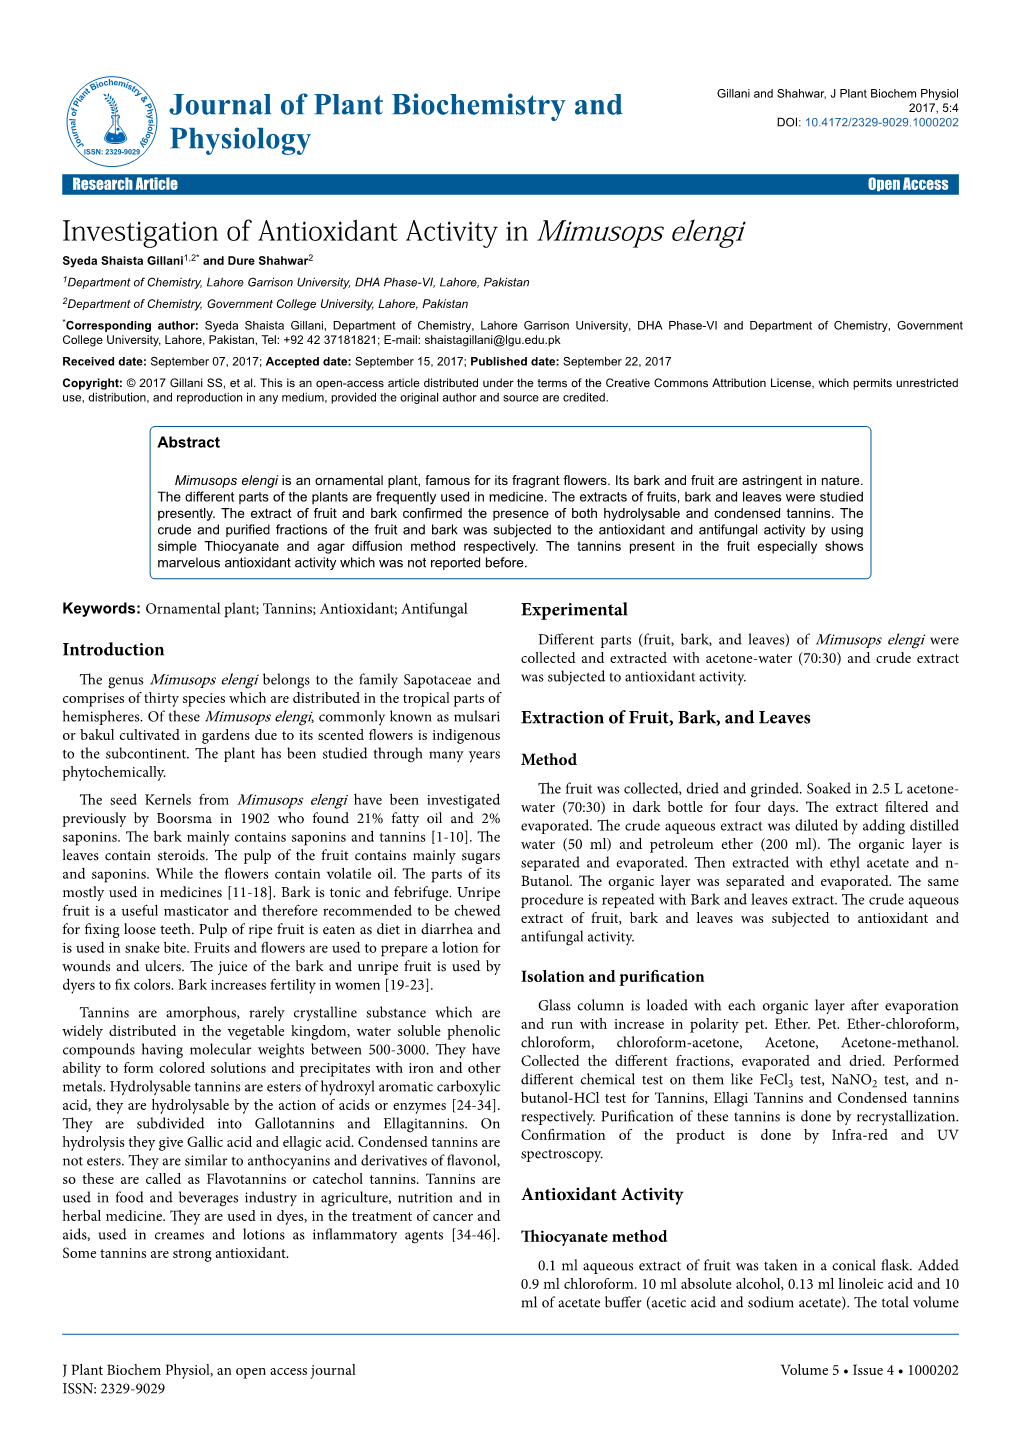 Investigation of Antioxidant Activity in Mimusops Elengi